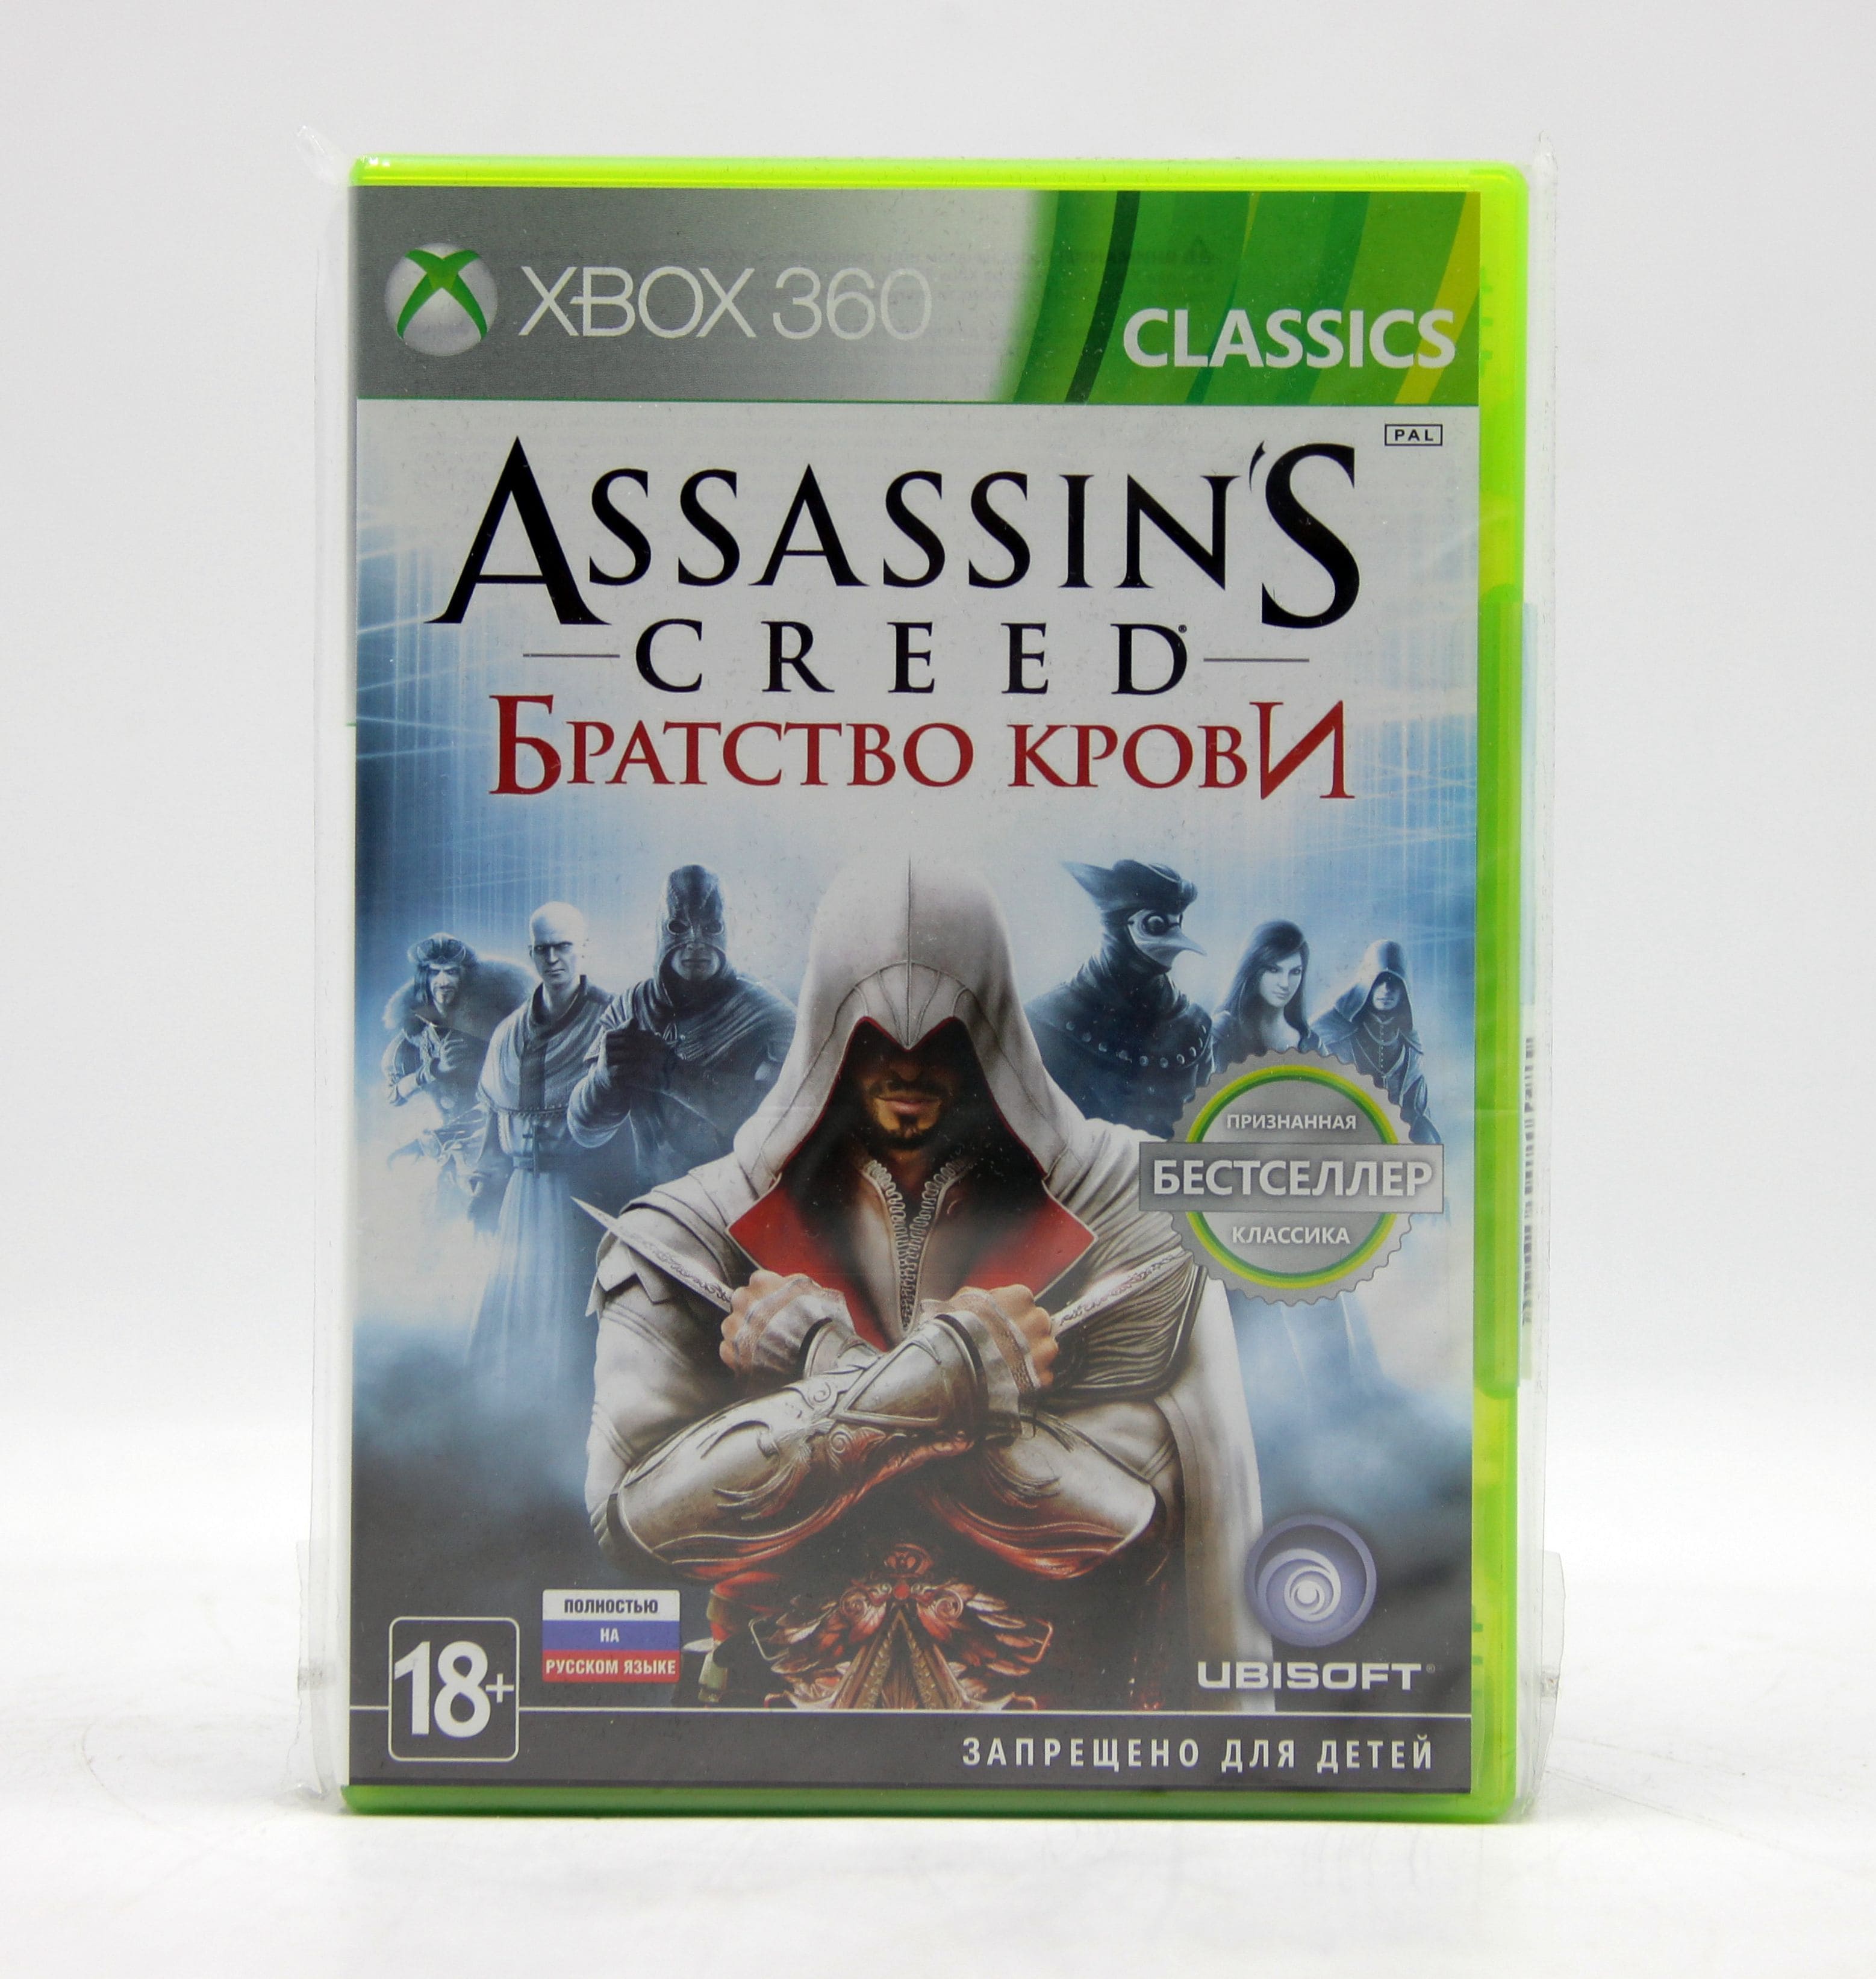 Assassin's Creed братство Xbox 360 Disk. Братство крови Xbox 360. Assassins Creed Brotherhood Xbox 360 Тула. Братство крови ассасин шифры. Русификатор brotherhood